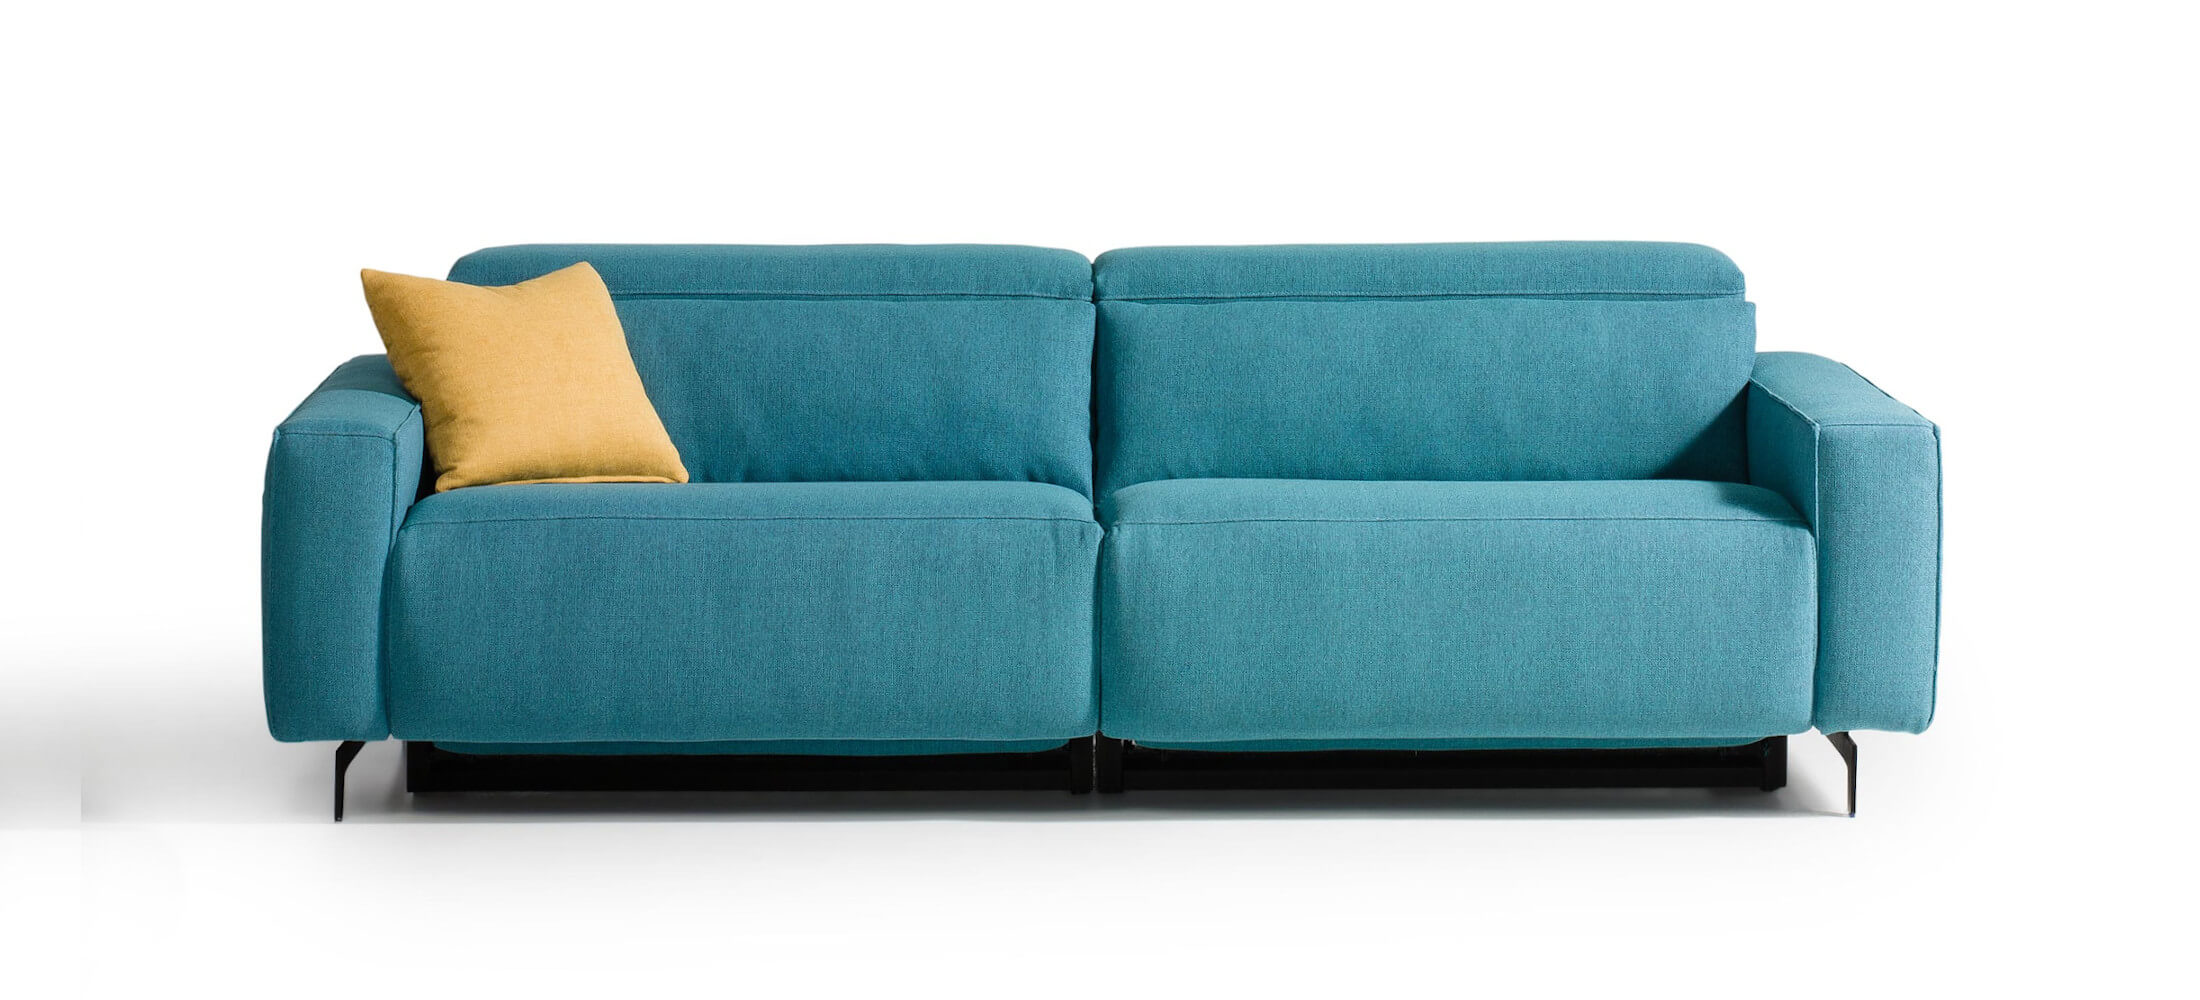 Sofa Shira relax vista frontal tapissat color truquesa